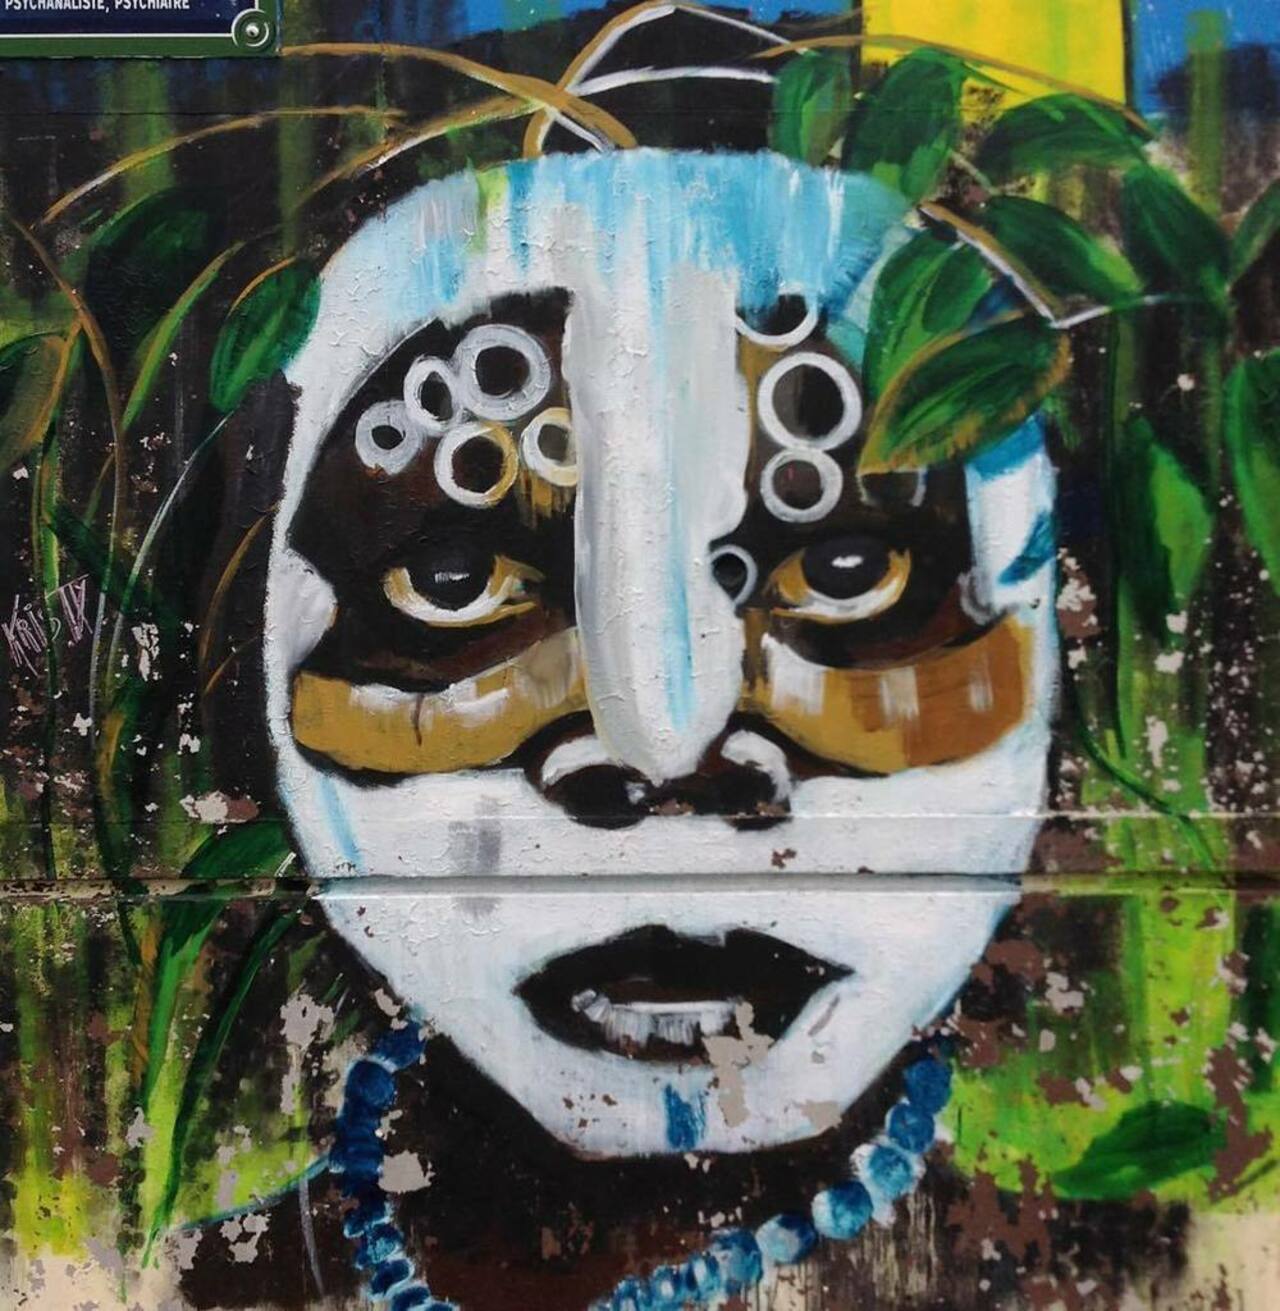 RT @StArtEverywhere: Guerrier #street #streetart #streetartparis #graff #graffiti #urban #urbain #urbanart #urbainart #art #artist #artd… https://t.co/SuNY0f8DMG